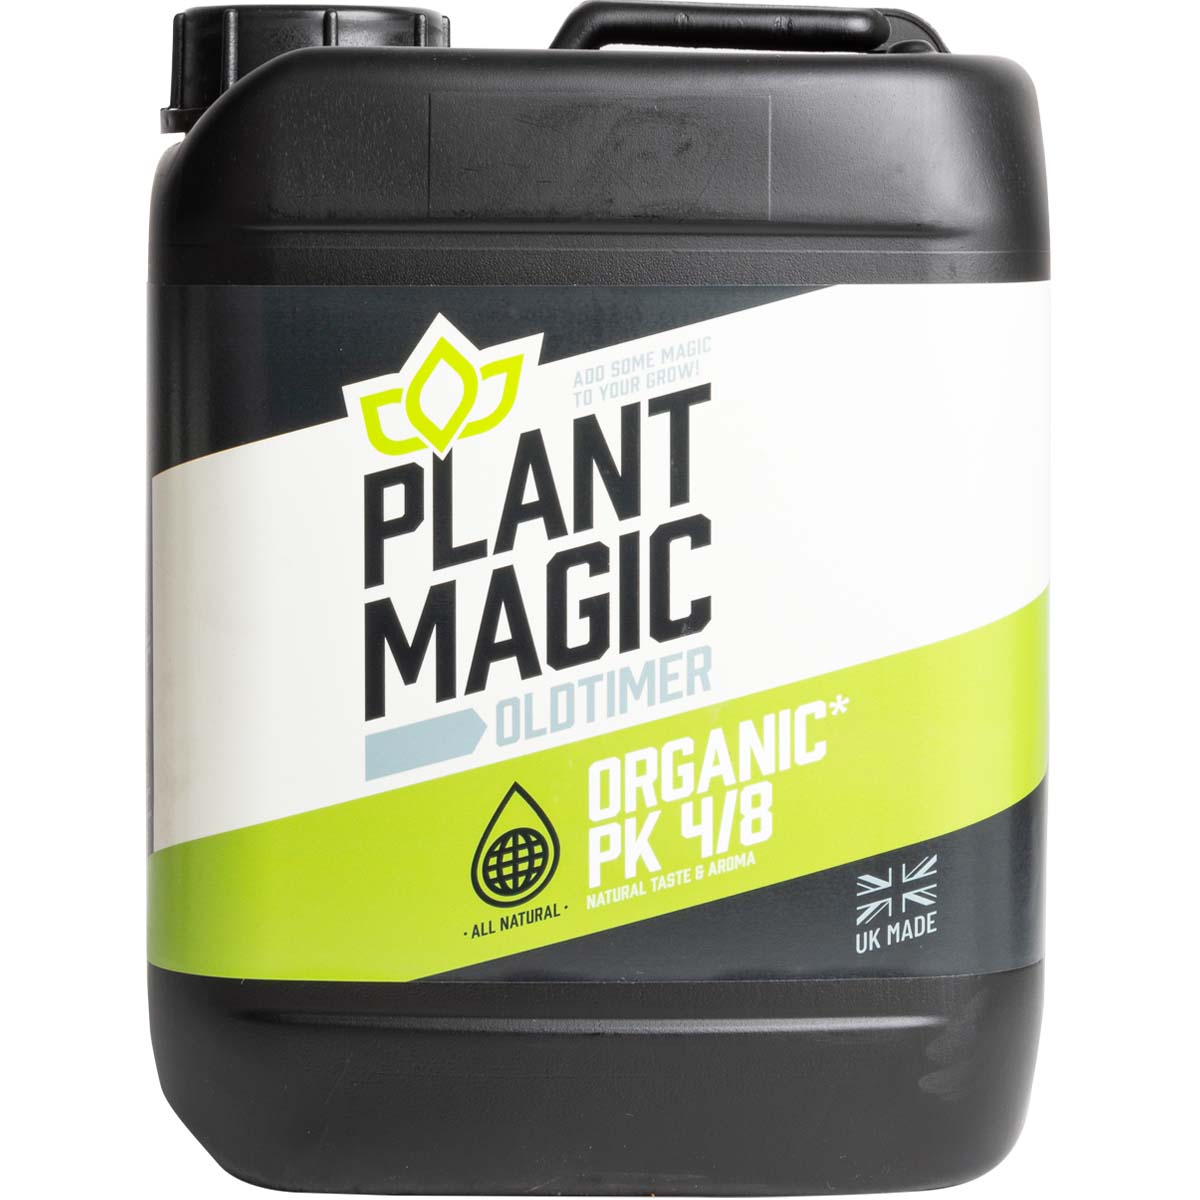 Plant Magic - Oldtimer Organic PK 4-8